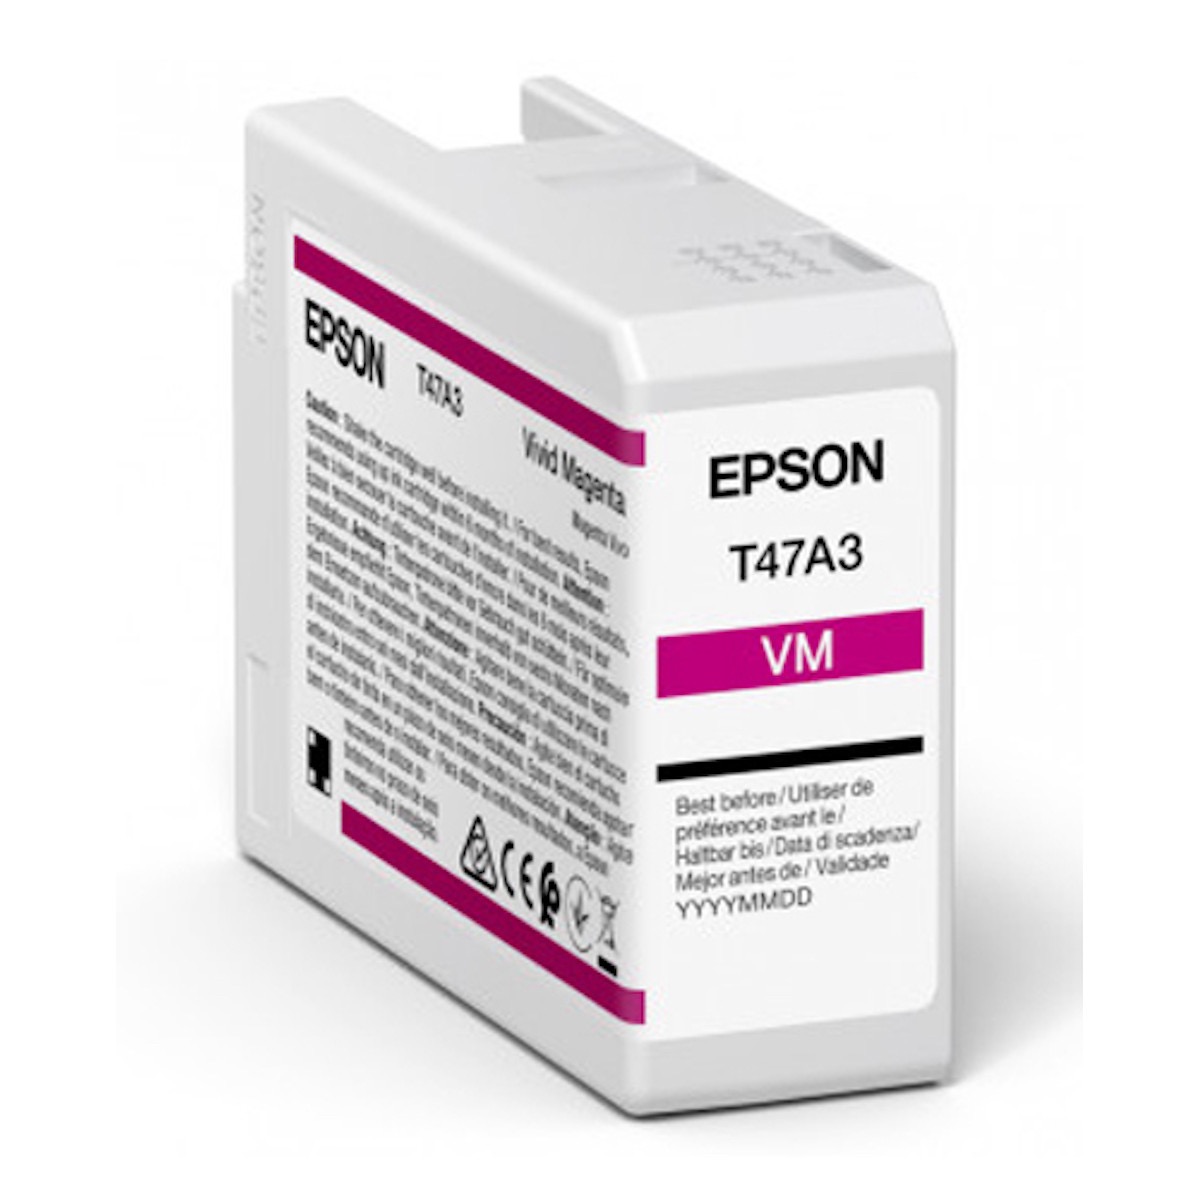 Epson T47A3 vivid magenta Tinte